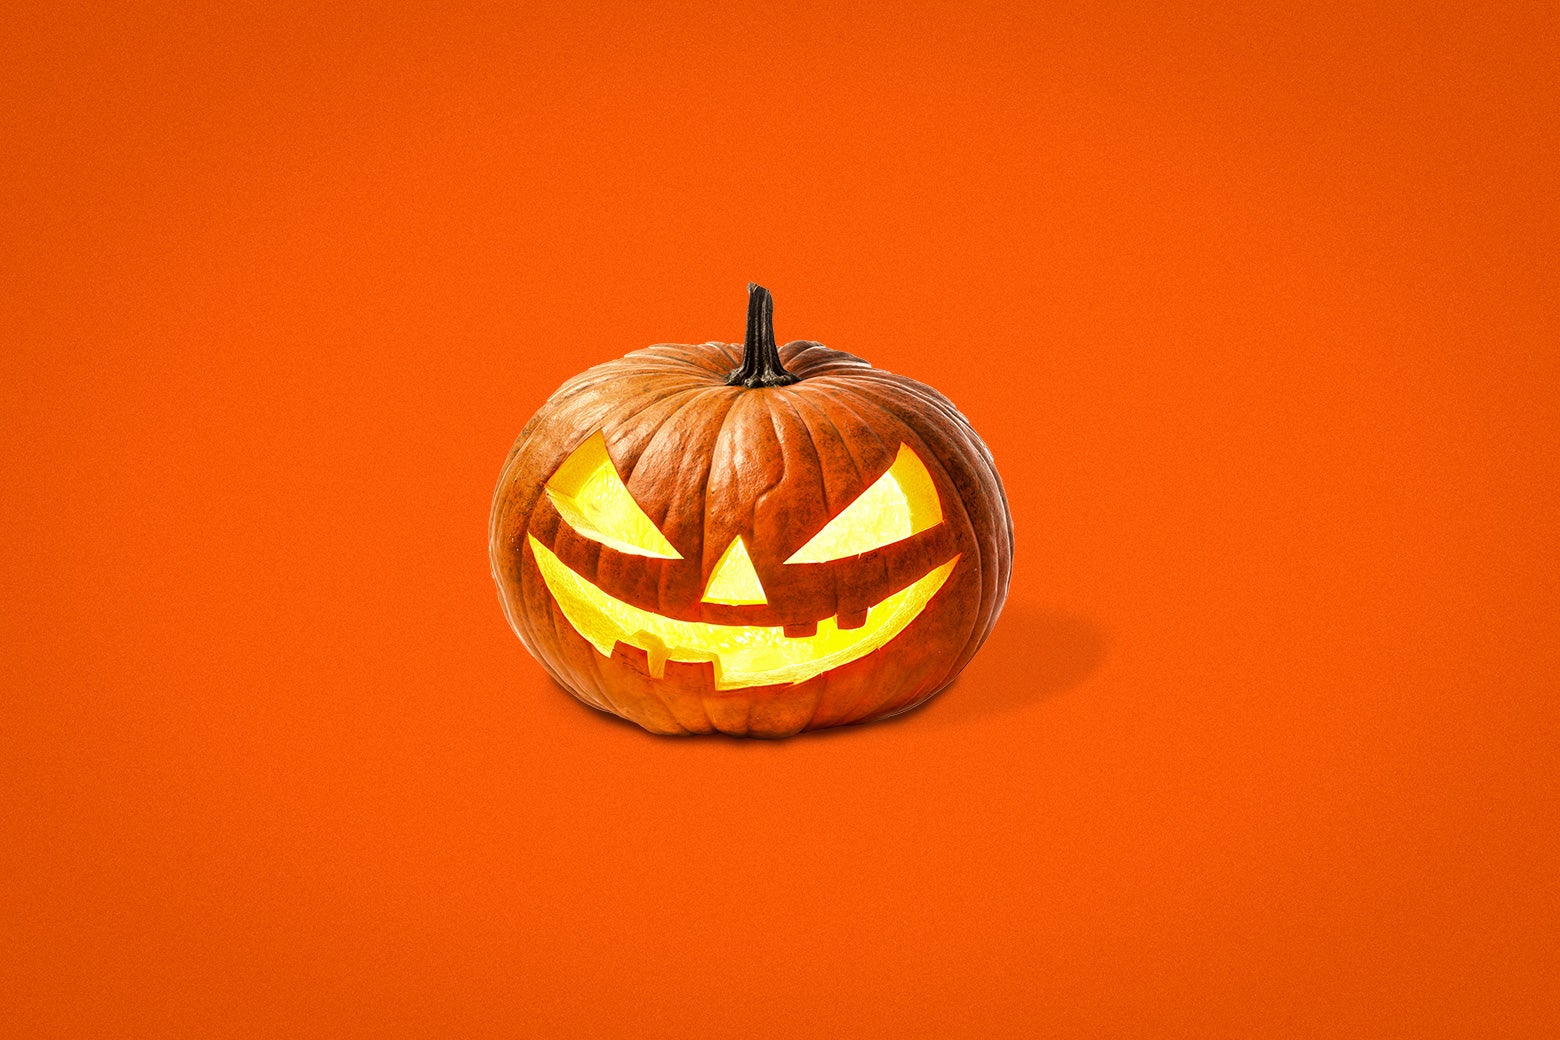 A menacing-looking jack-o-lantern against an orange background.